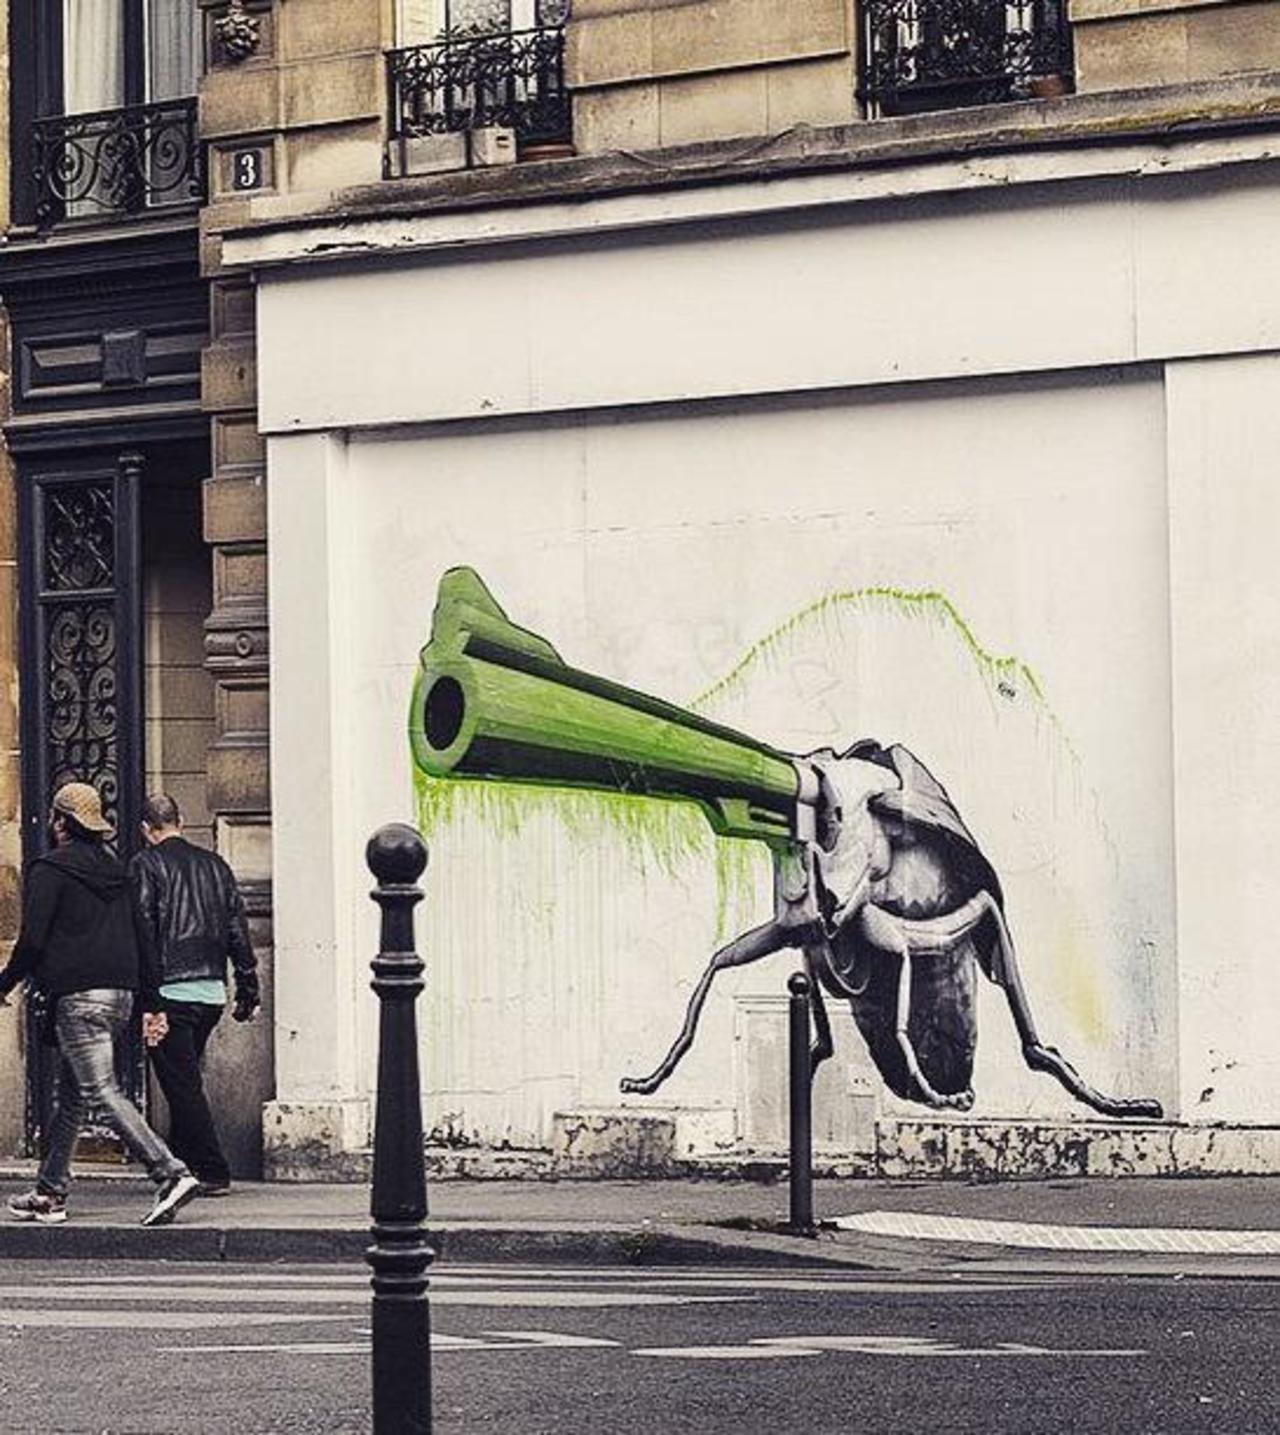 Technology merges with nature.
Street Art by Ludo in Paris 

#art #arte #graffiti #streetart http://t.co/UxuNY4yE47